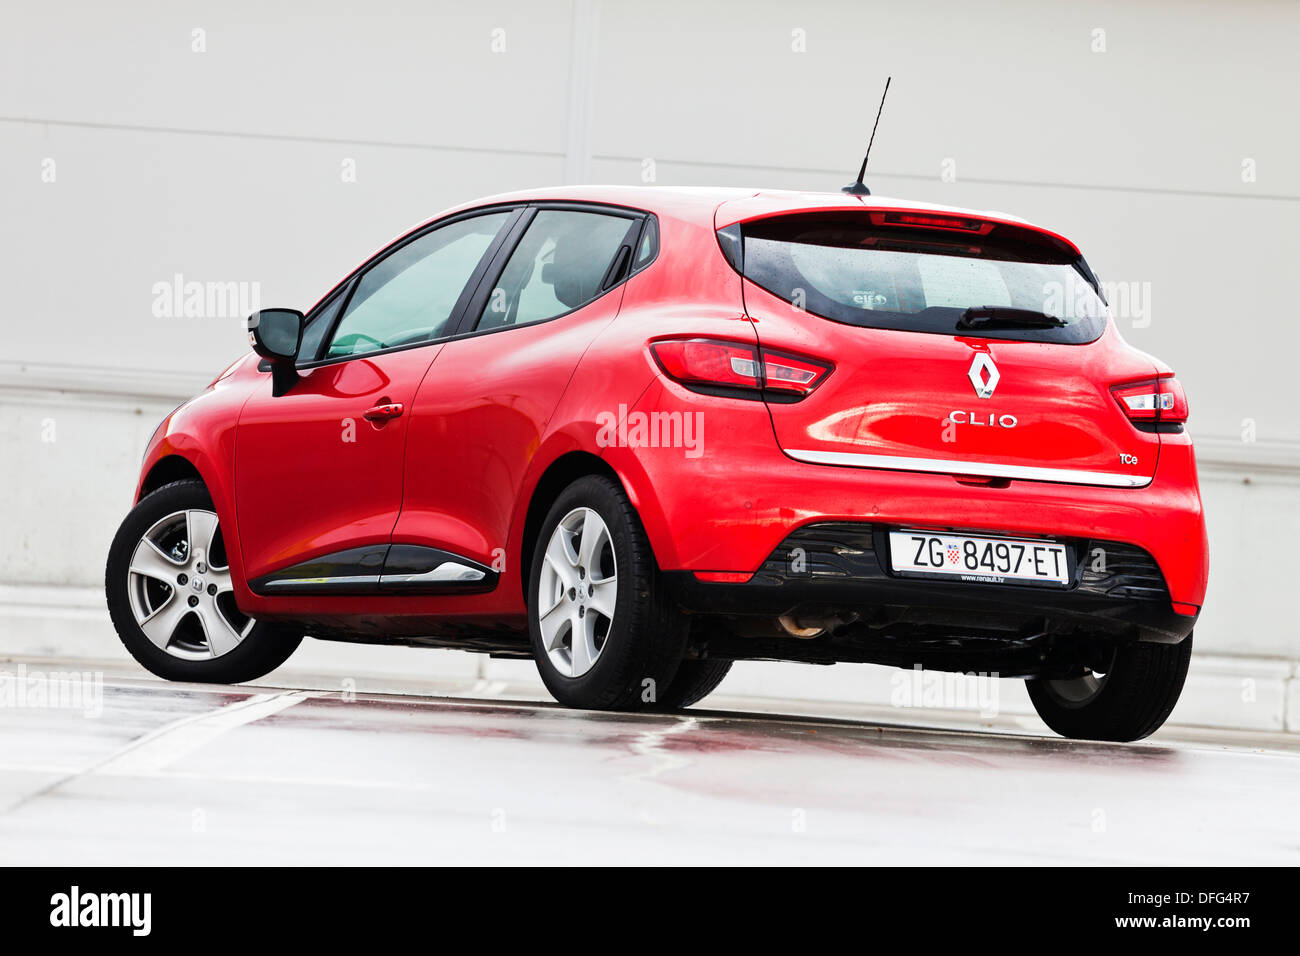 Renault clio iv -Fotos und -Bildmaterial in hoher Auflösung – Alamy